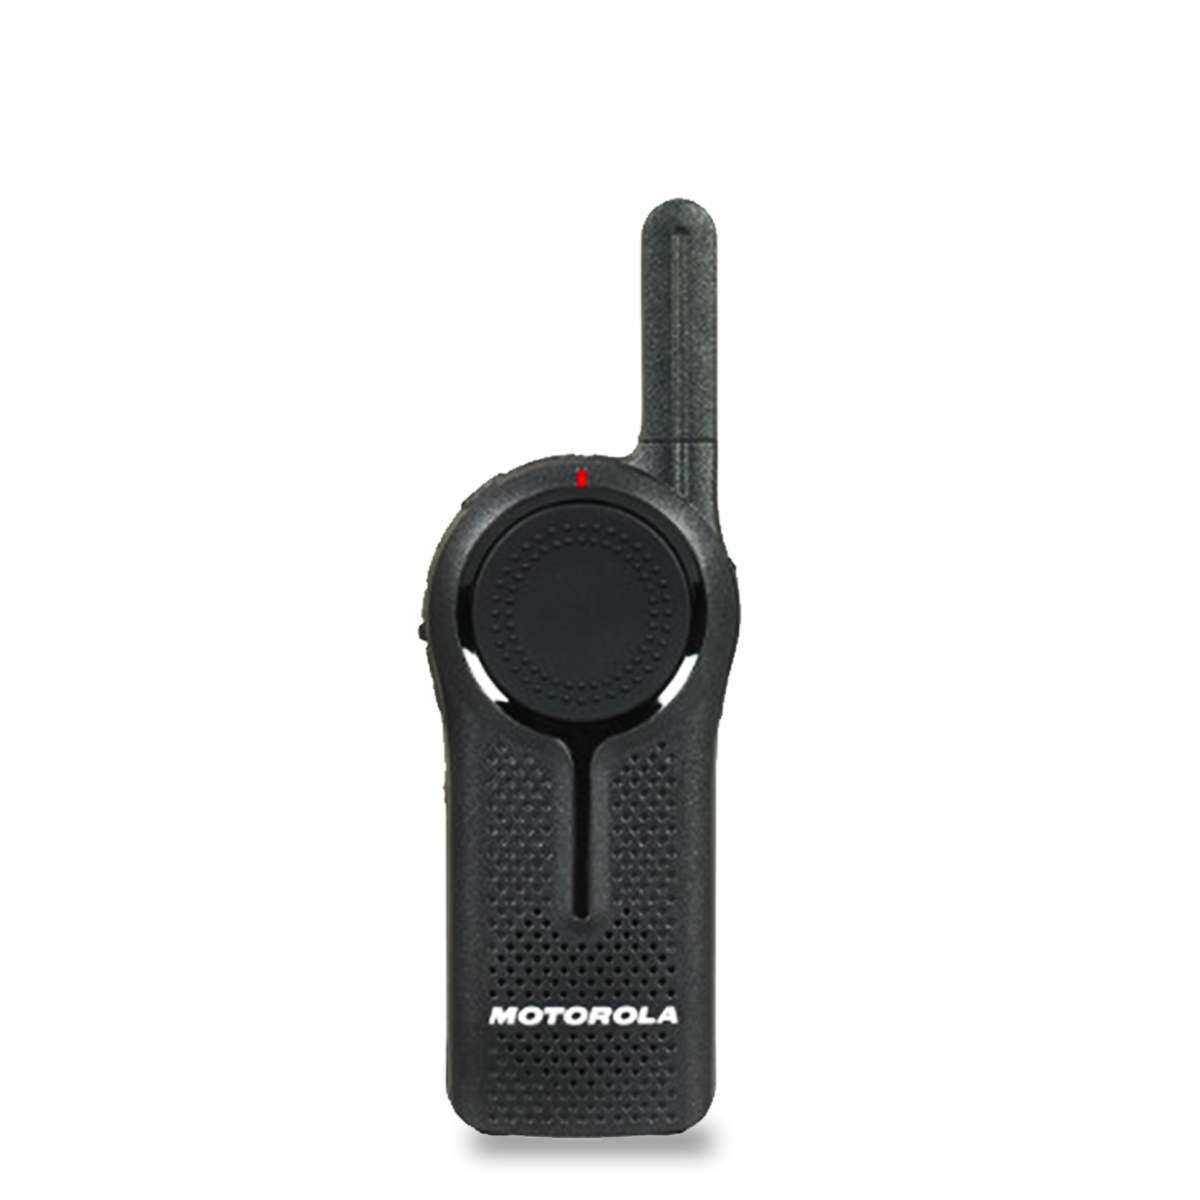 Radio Motorola DLR Empresarial Digital DLR1020 900MHz